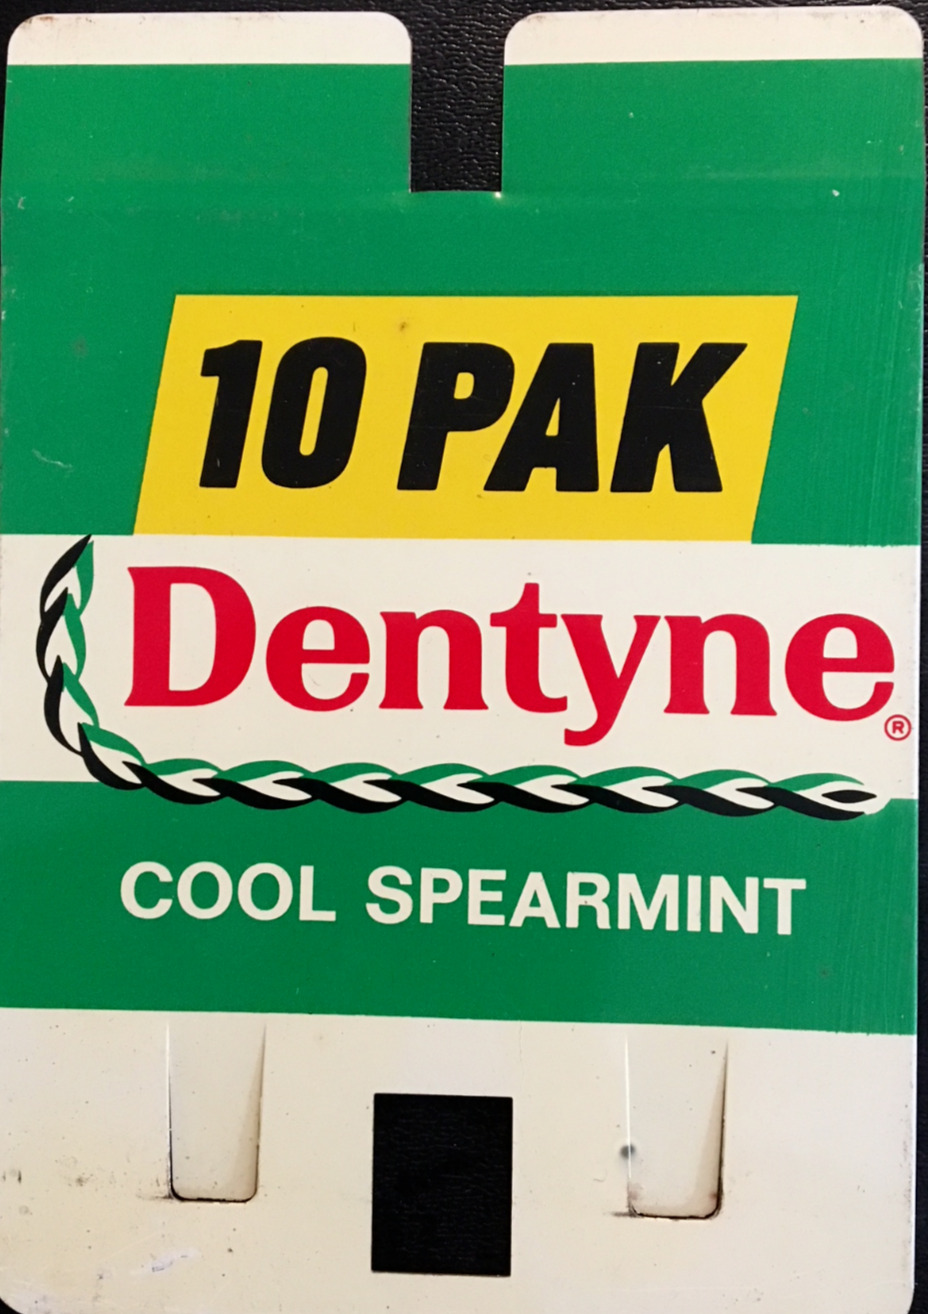 Metal 10 Pak Dentyne Cool Spearmint Gum Rack Sign 1970-1980.